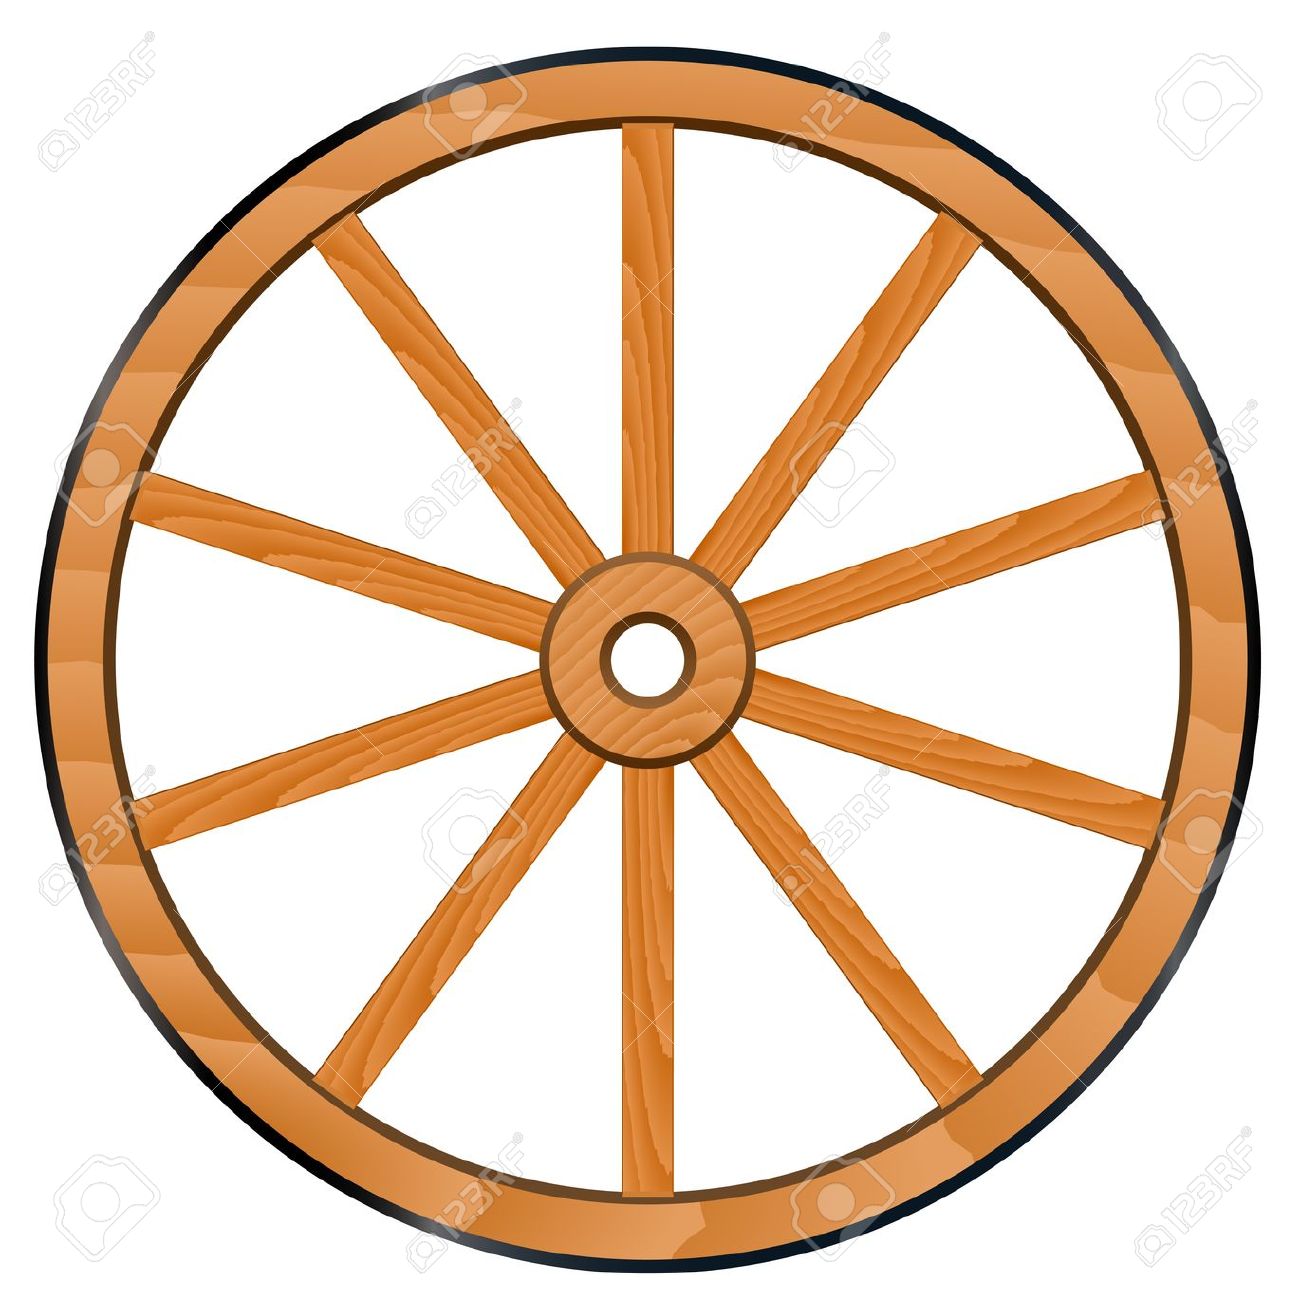 Wagon wheel clipart - Clipground